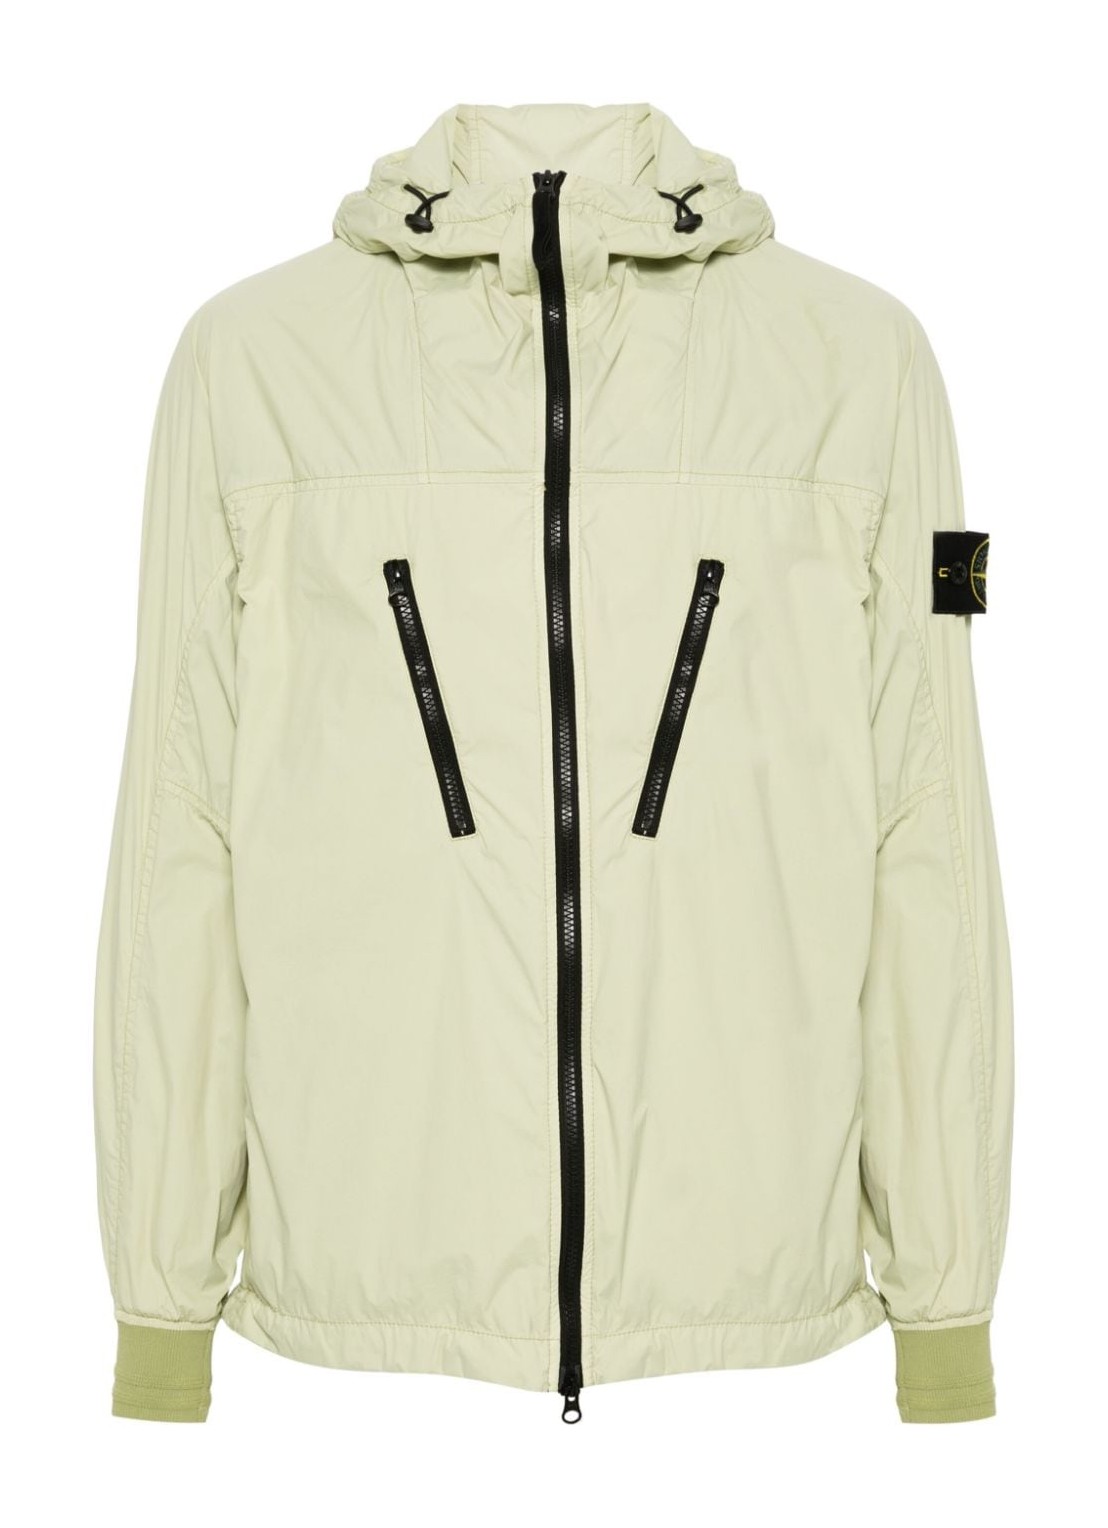 Outerwear stone island outerwear man packable jacket 801540425 v0051 talla verde
 